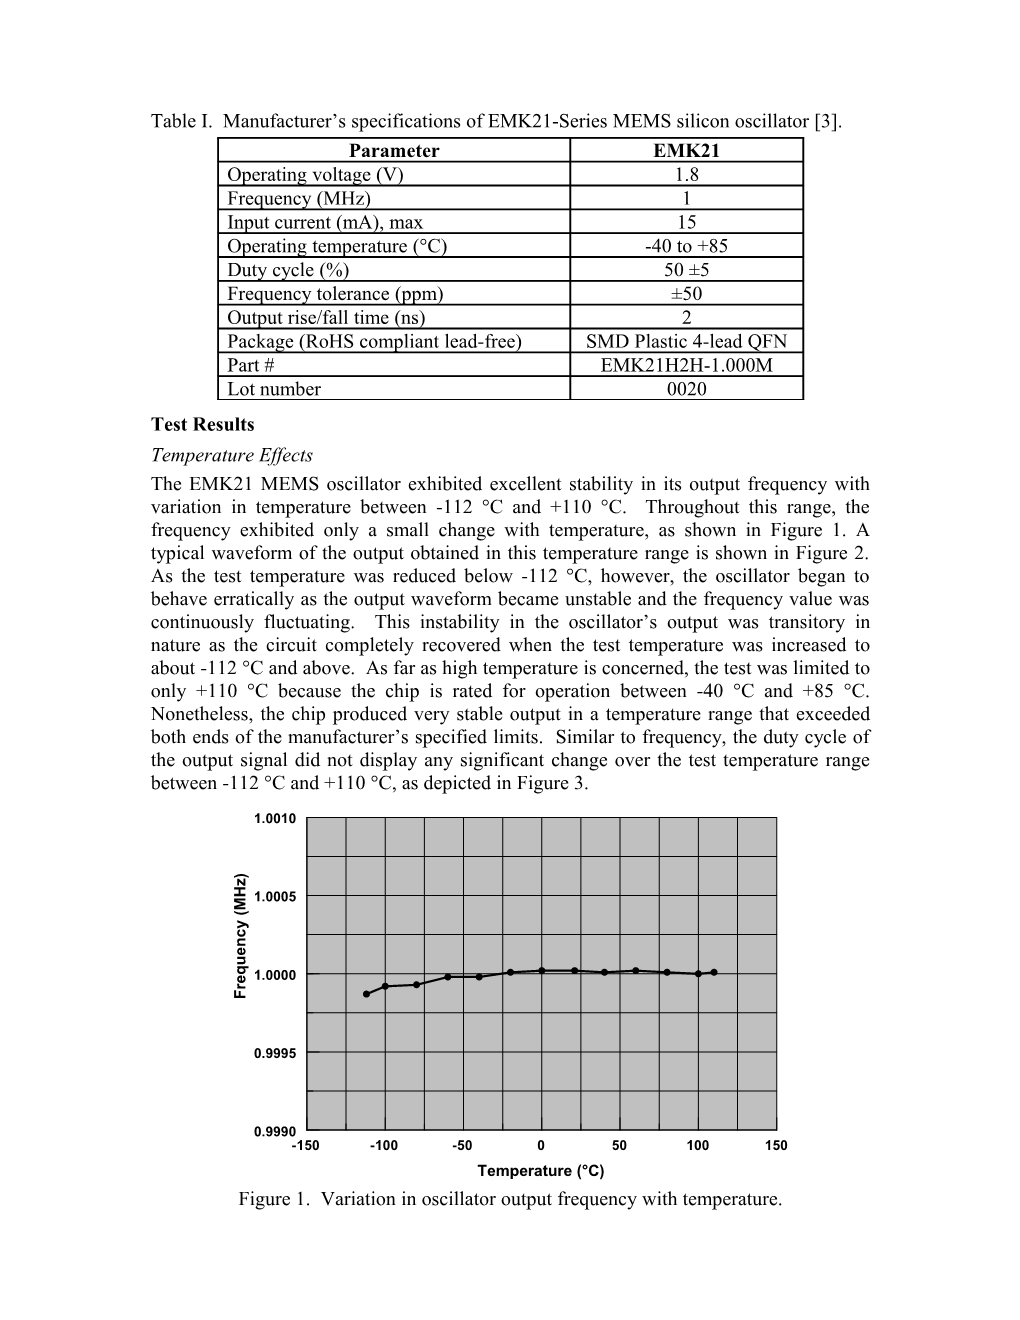 Assessment of Operation of EMK21 MEMS Silicon Oscillator Over Wide Temperature Range